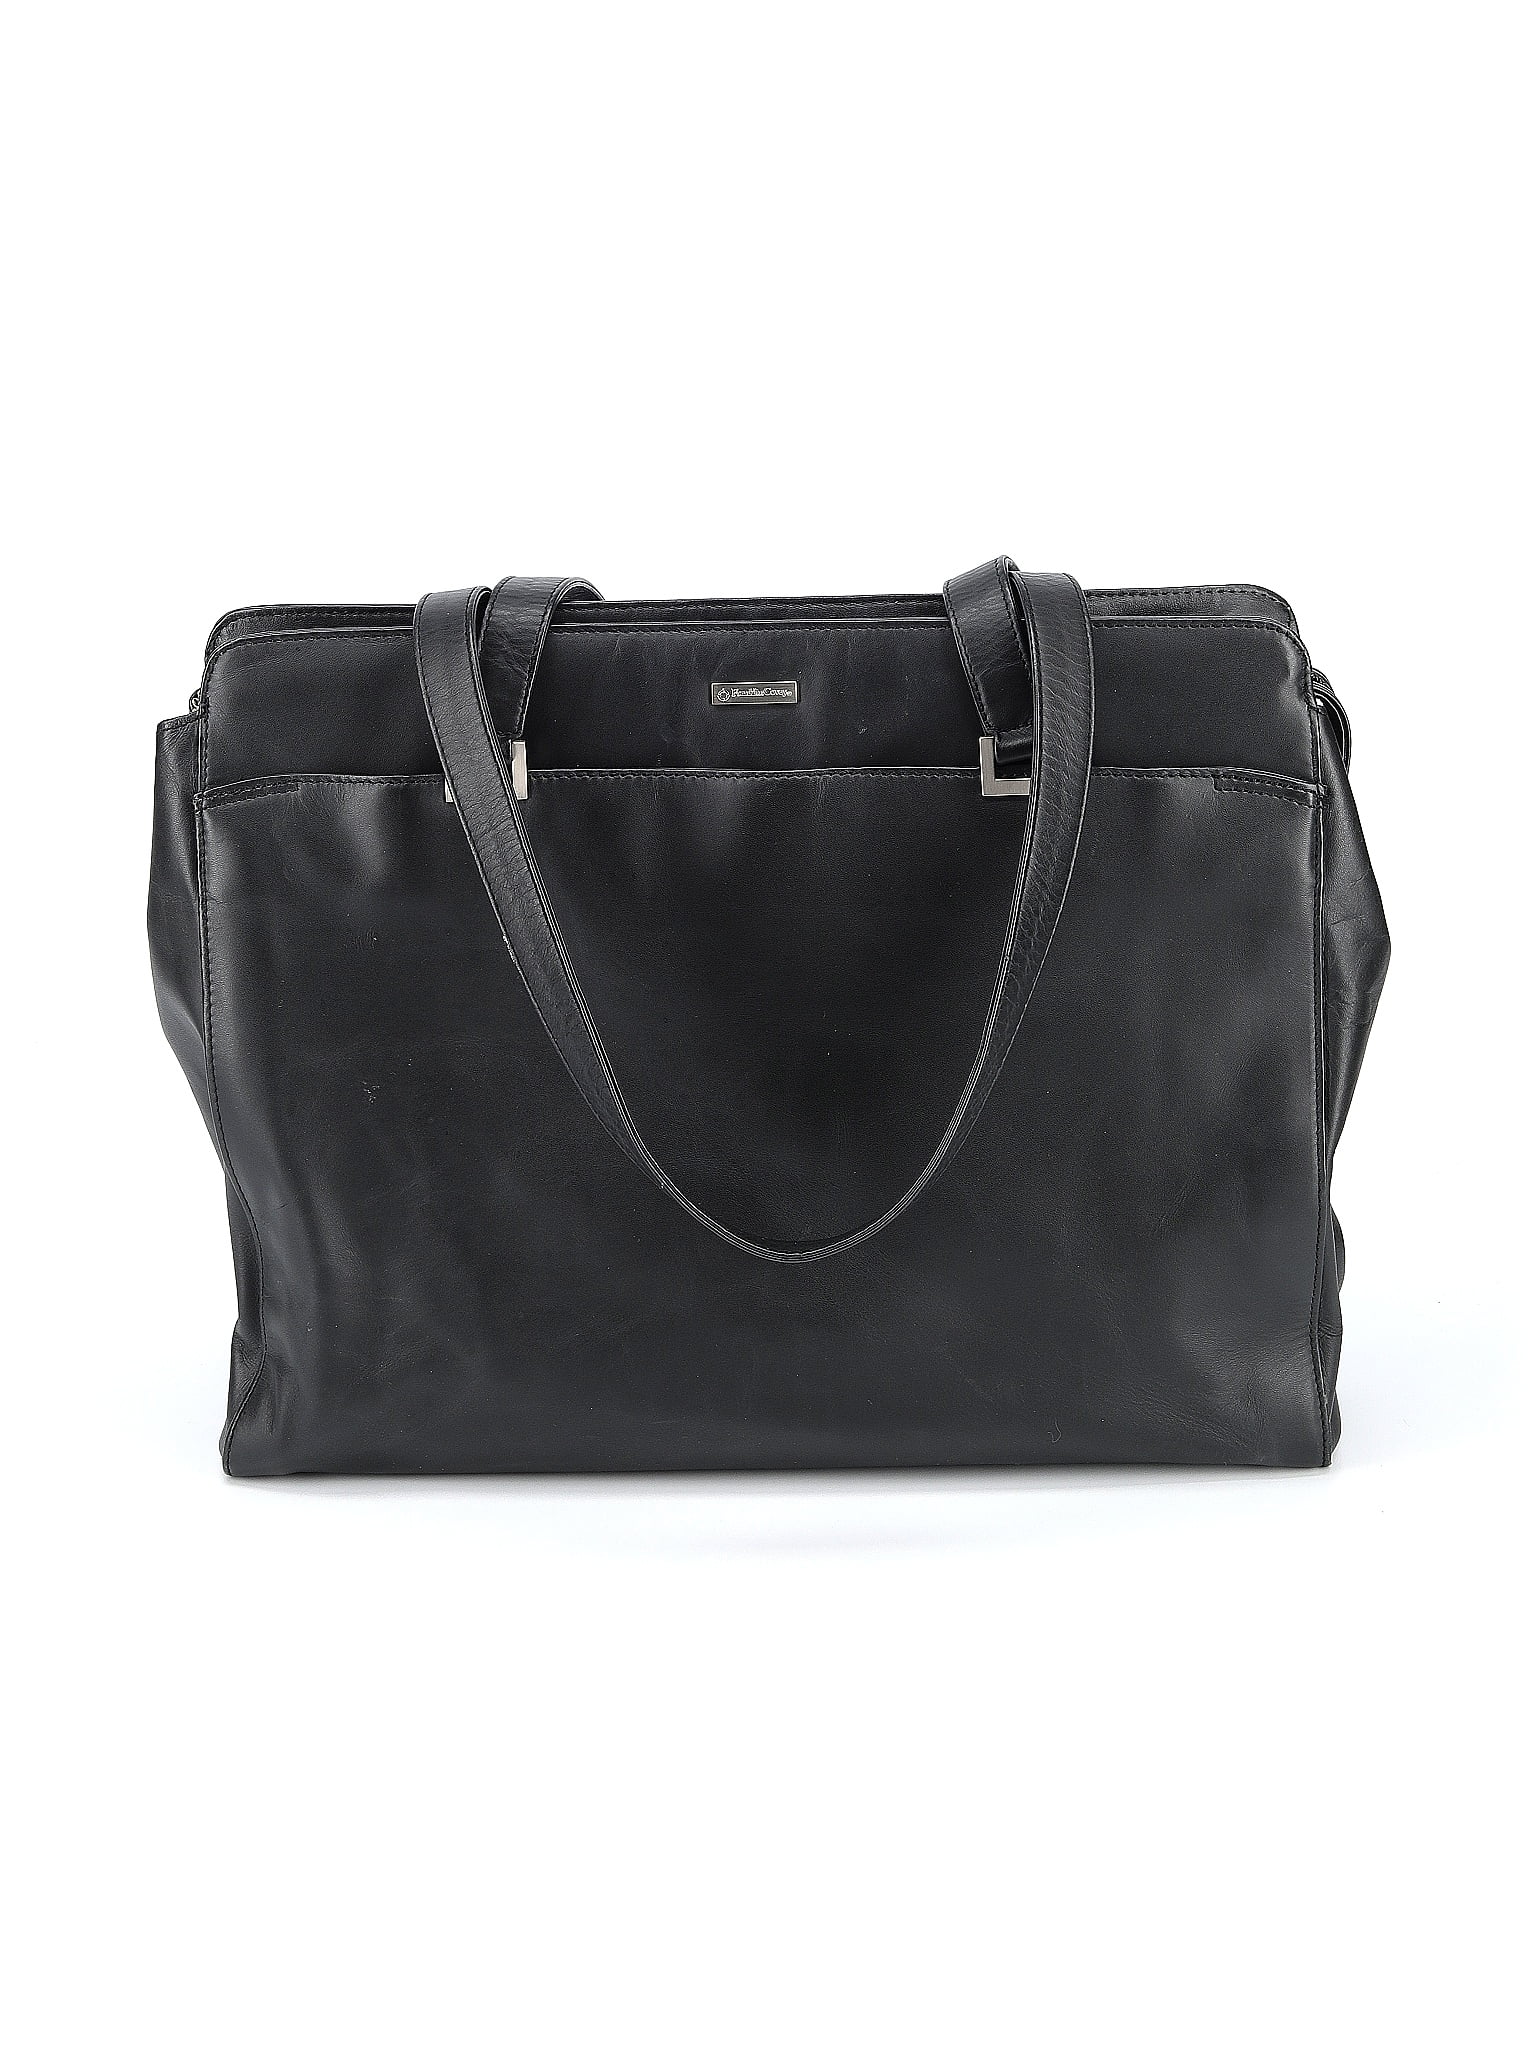 FRANKLIN COVEY ORANGE Leather Bag $40.00 - PicClick